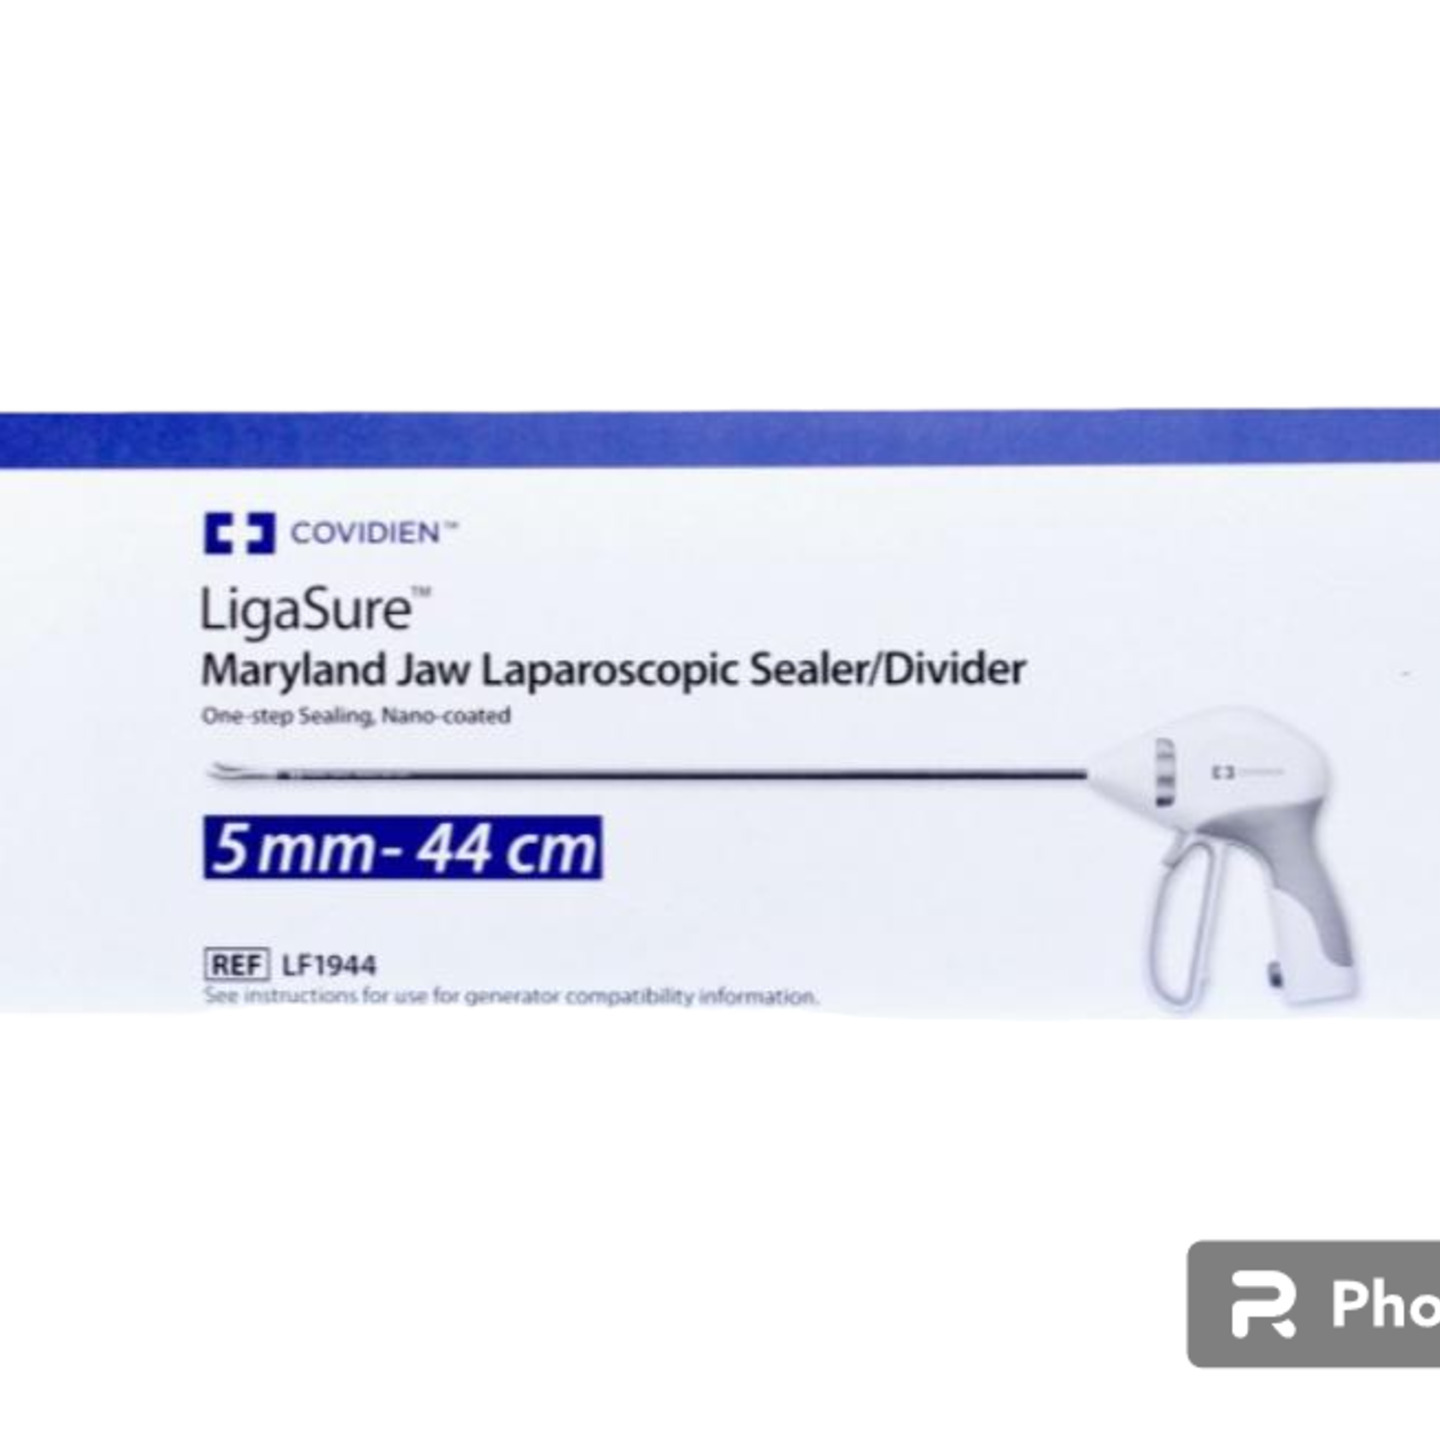 Ligasure Maryland Jaw Laparoscopic Sealer/Divider 5 mm-44 cm